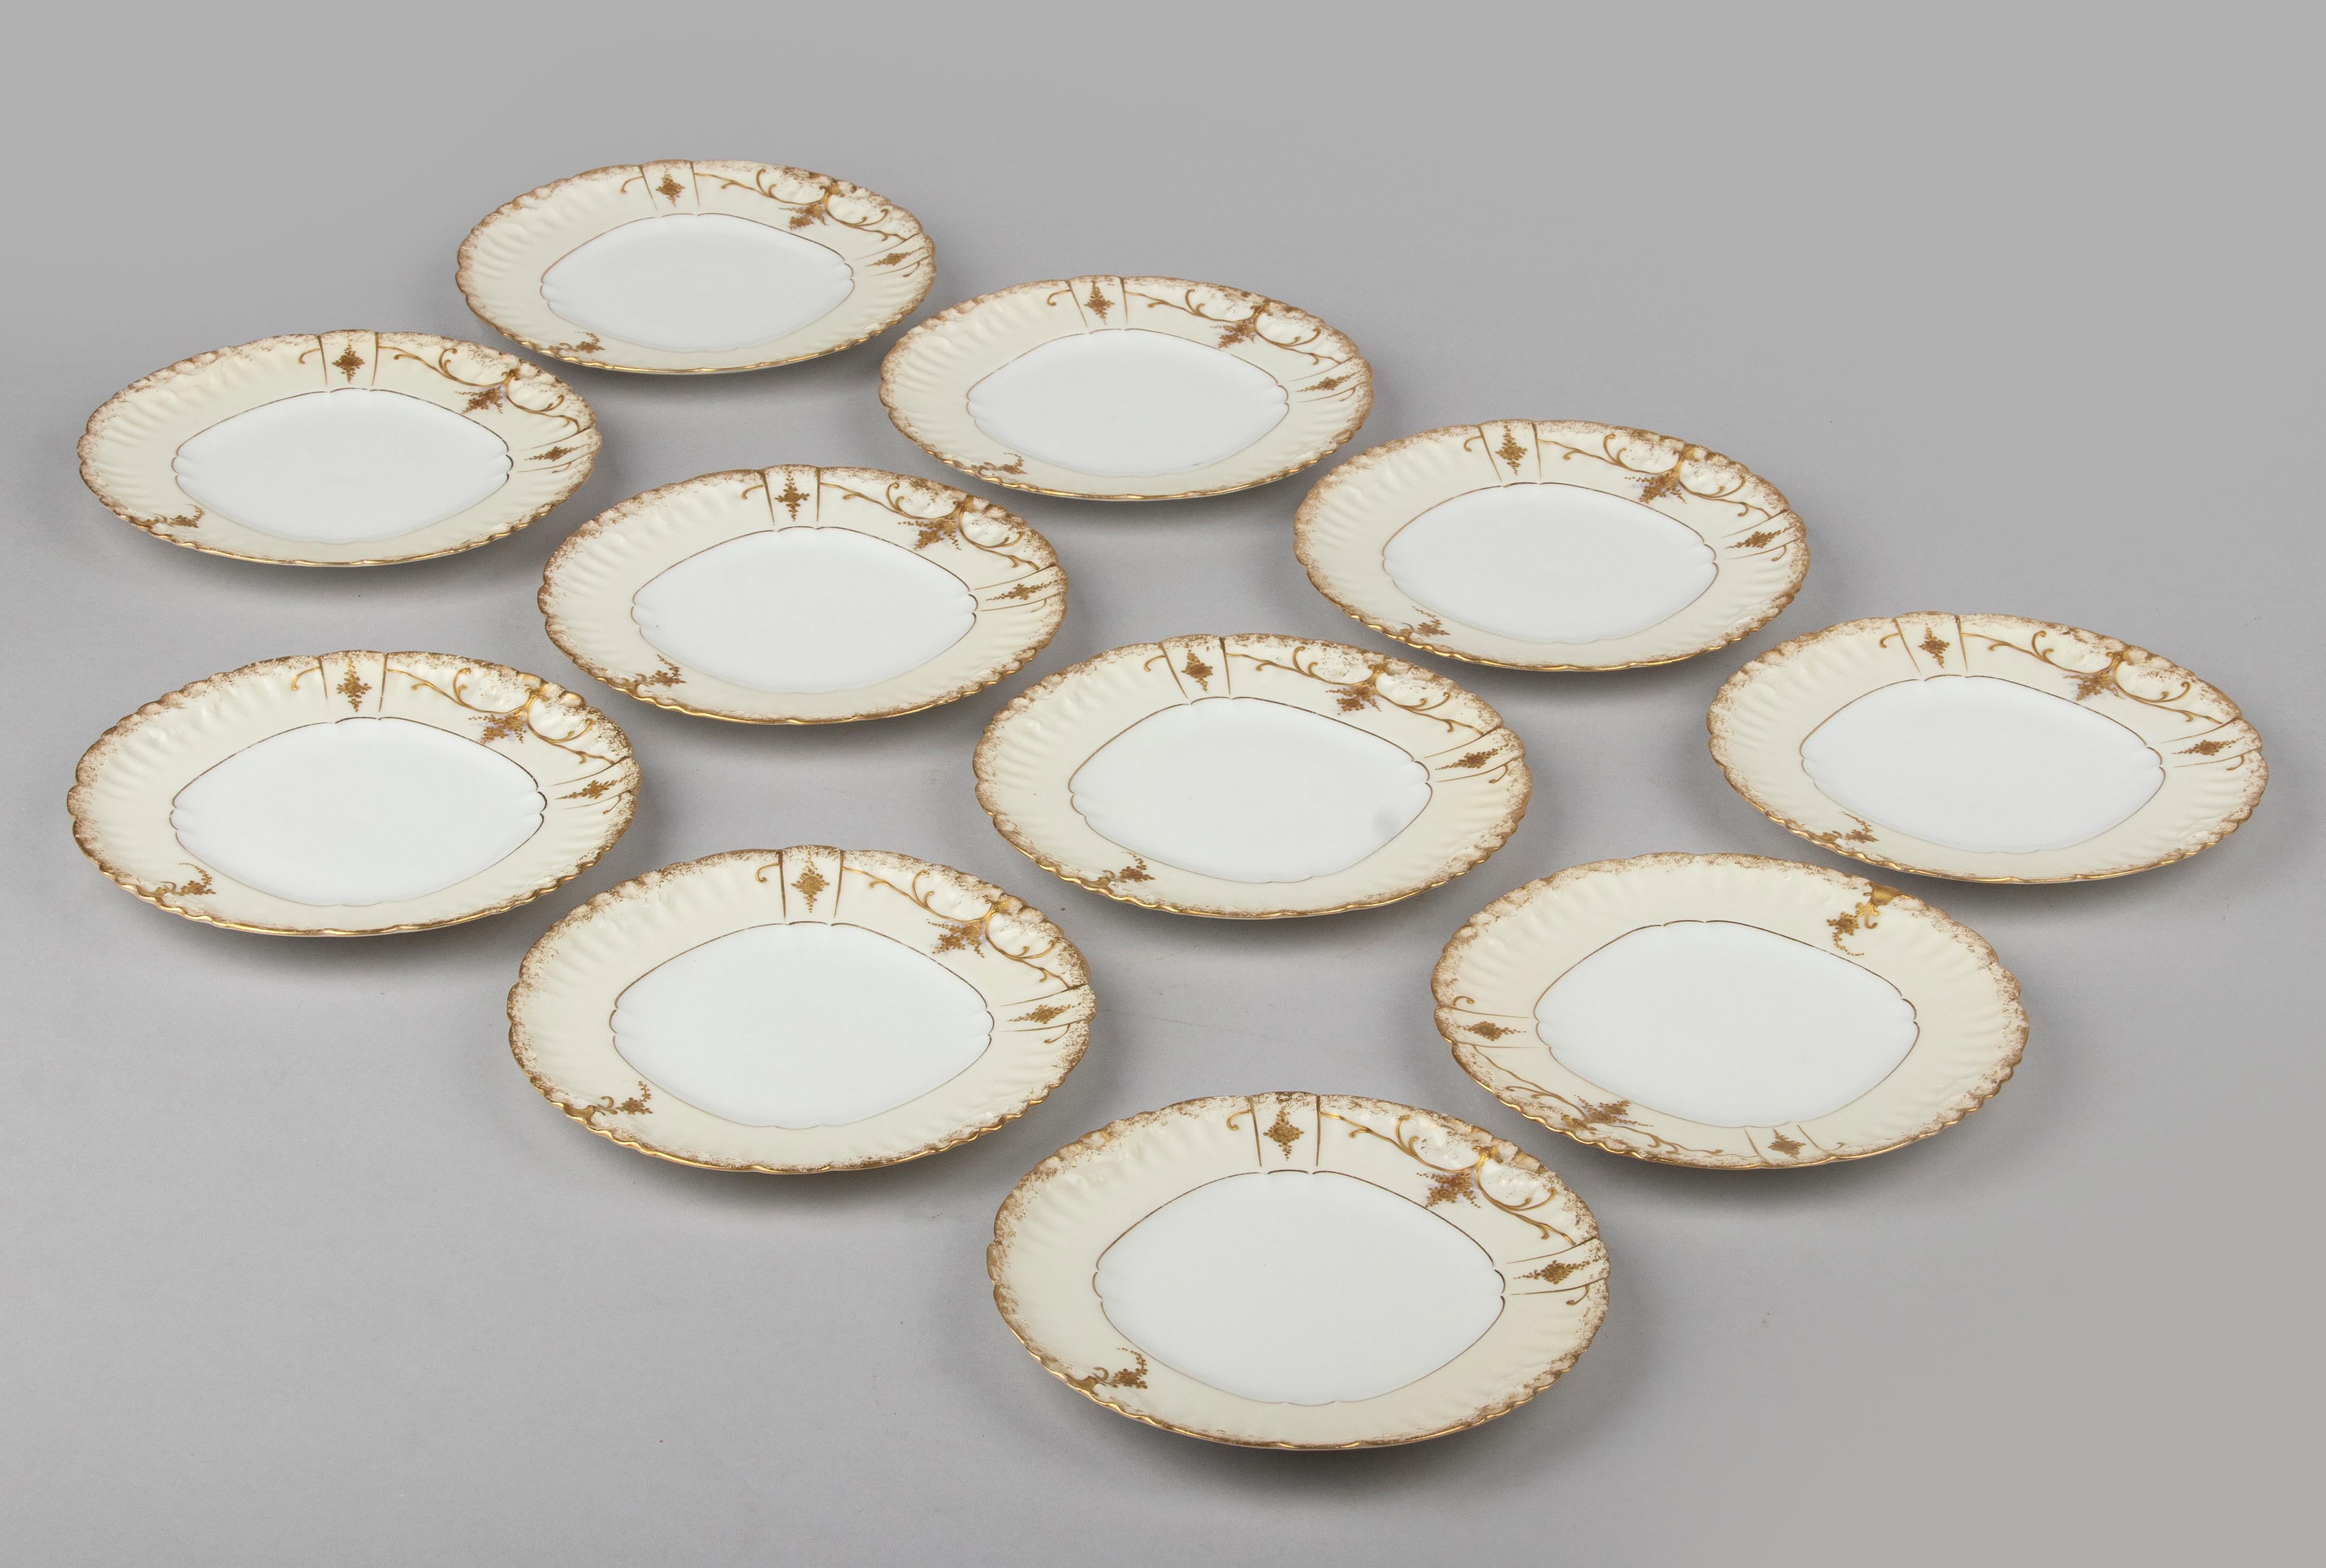 Art Nouveau Set of 11 Early 20th Century Porcelain Dessert Plates Gilded by Limoges